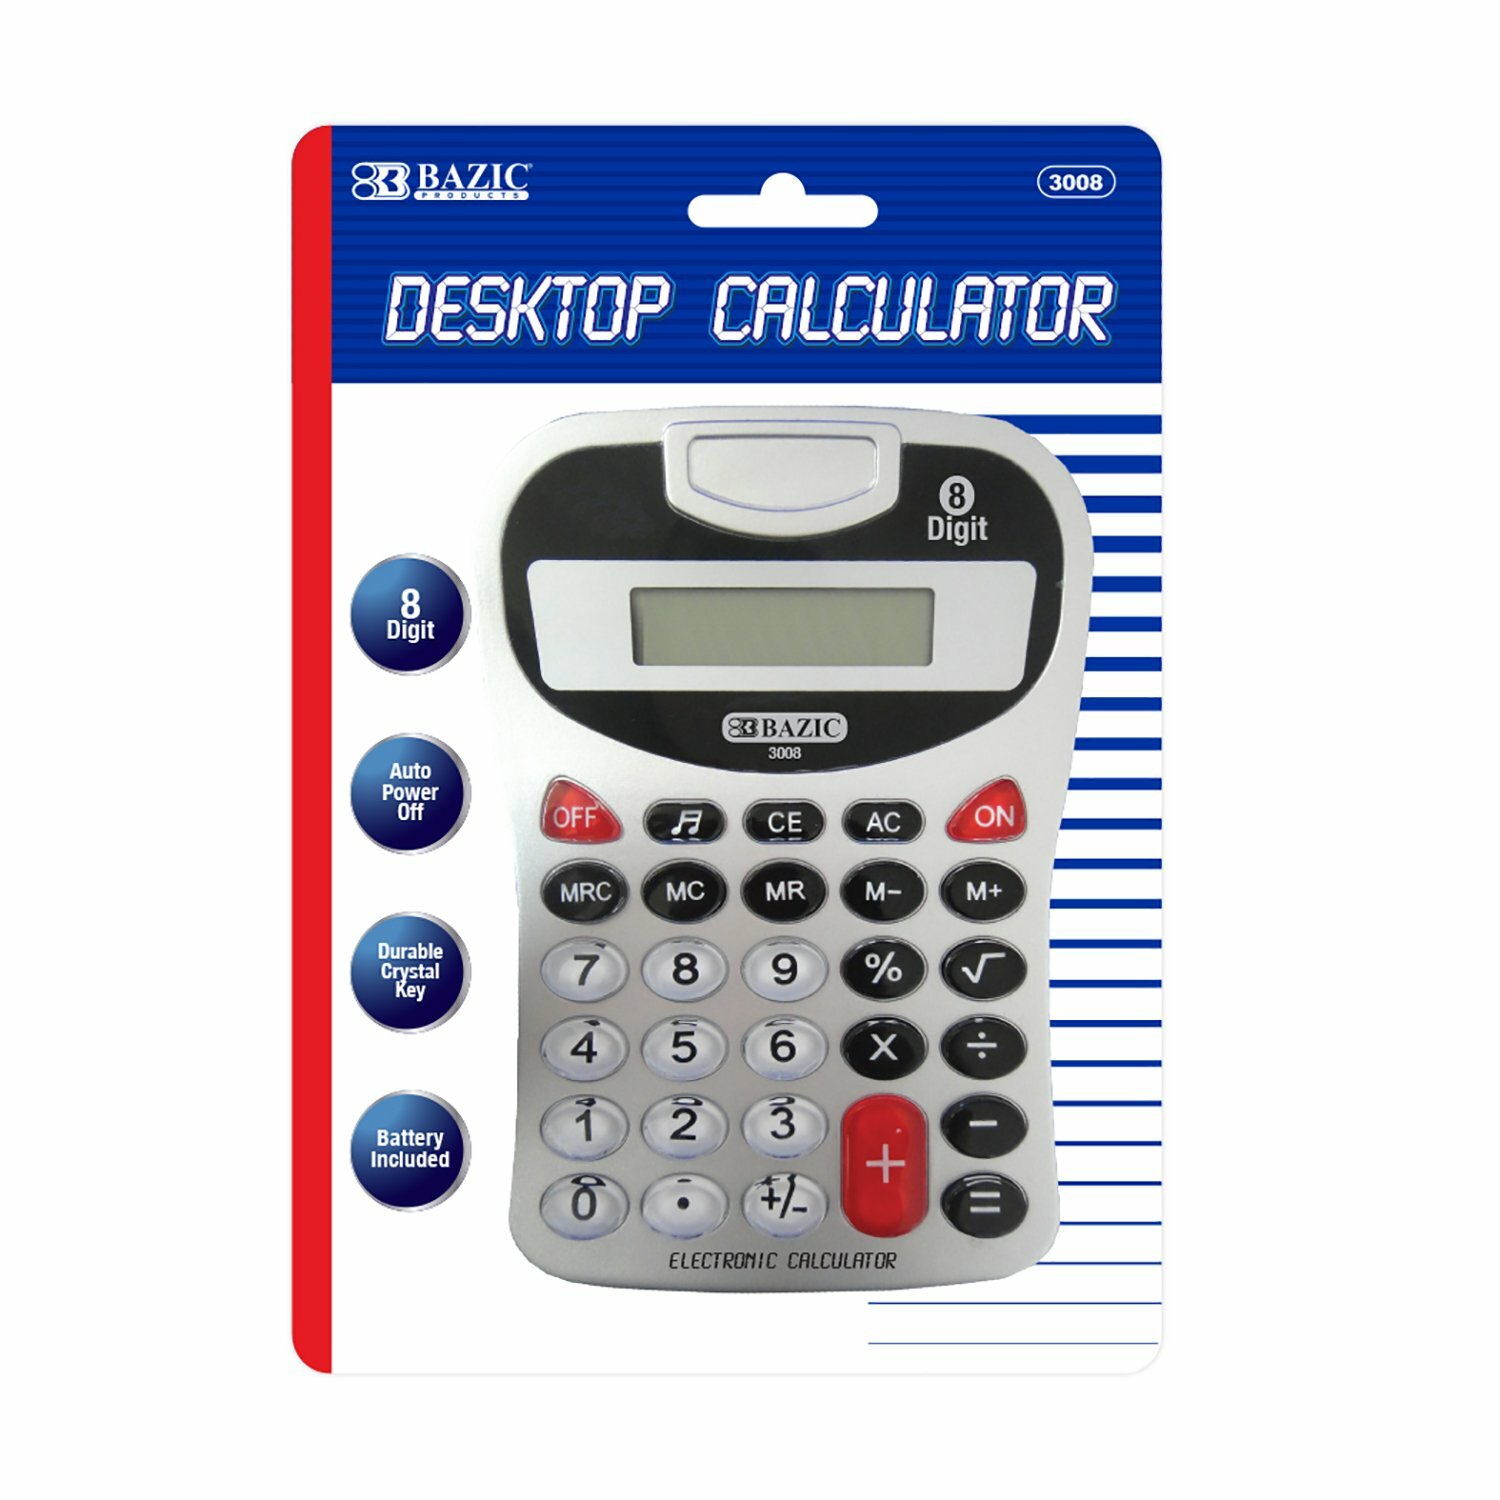 Calculator Bazic Desktop/8Di (3008)